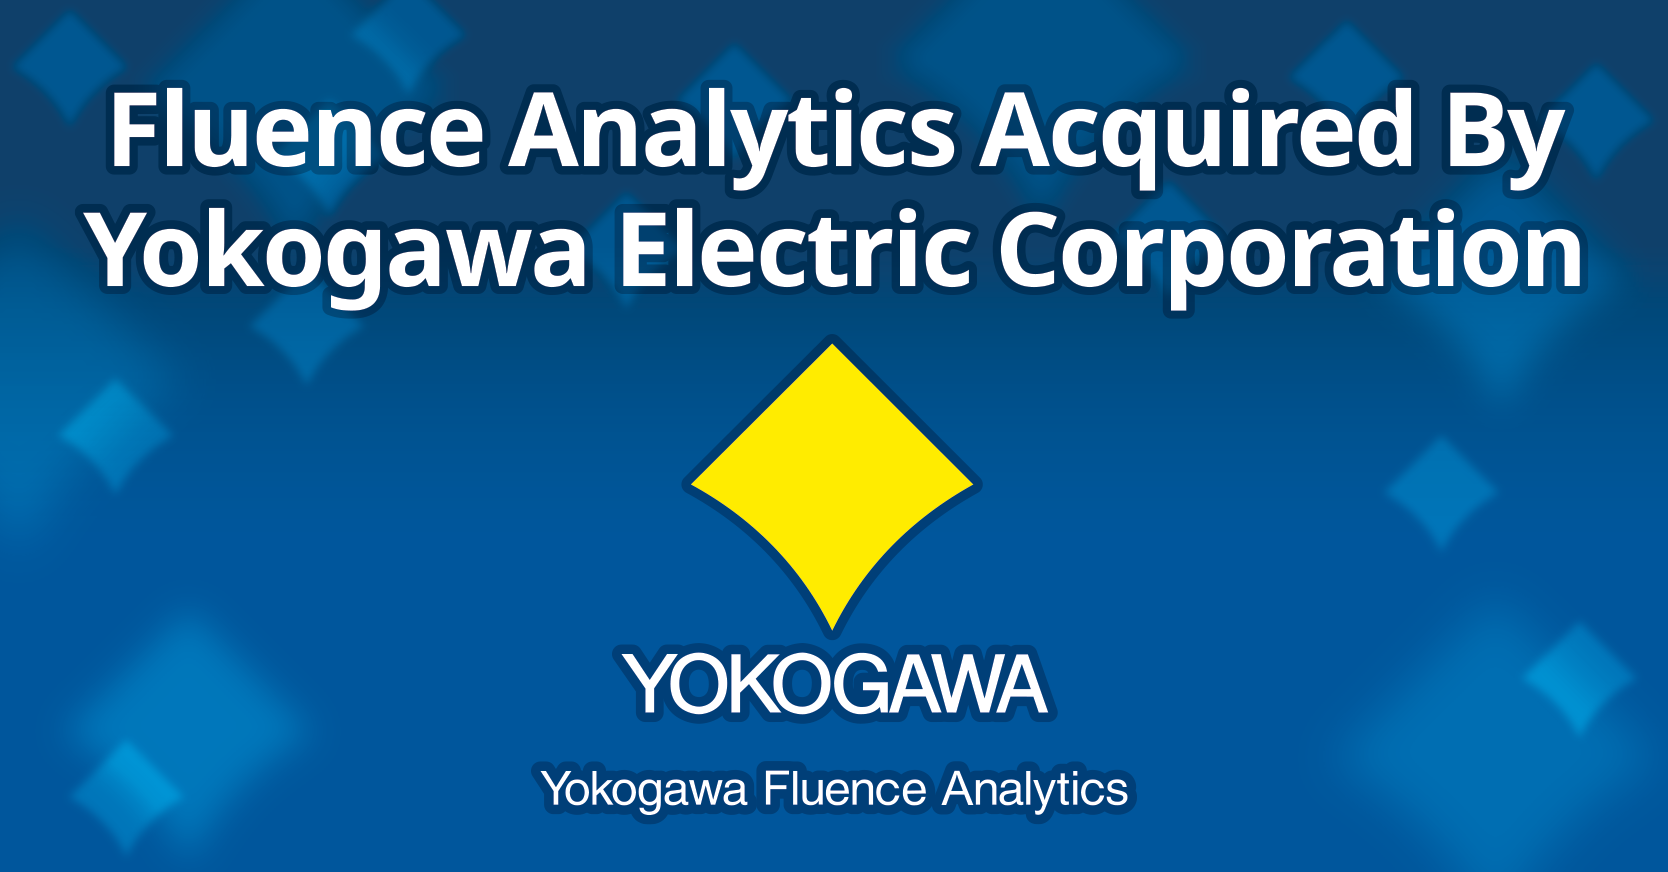 Fluence Analytics Acquired by Yokogawa